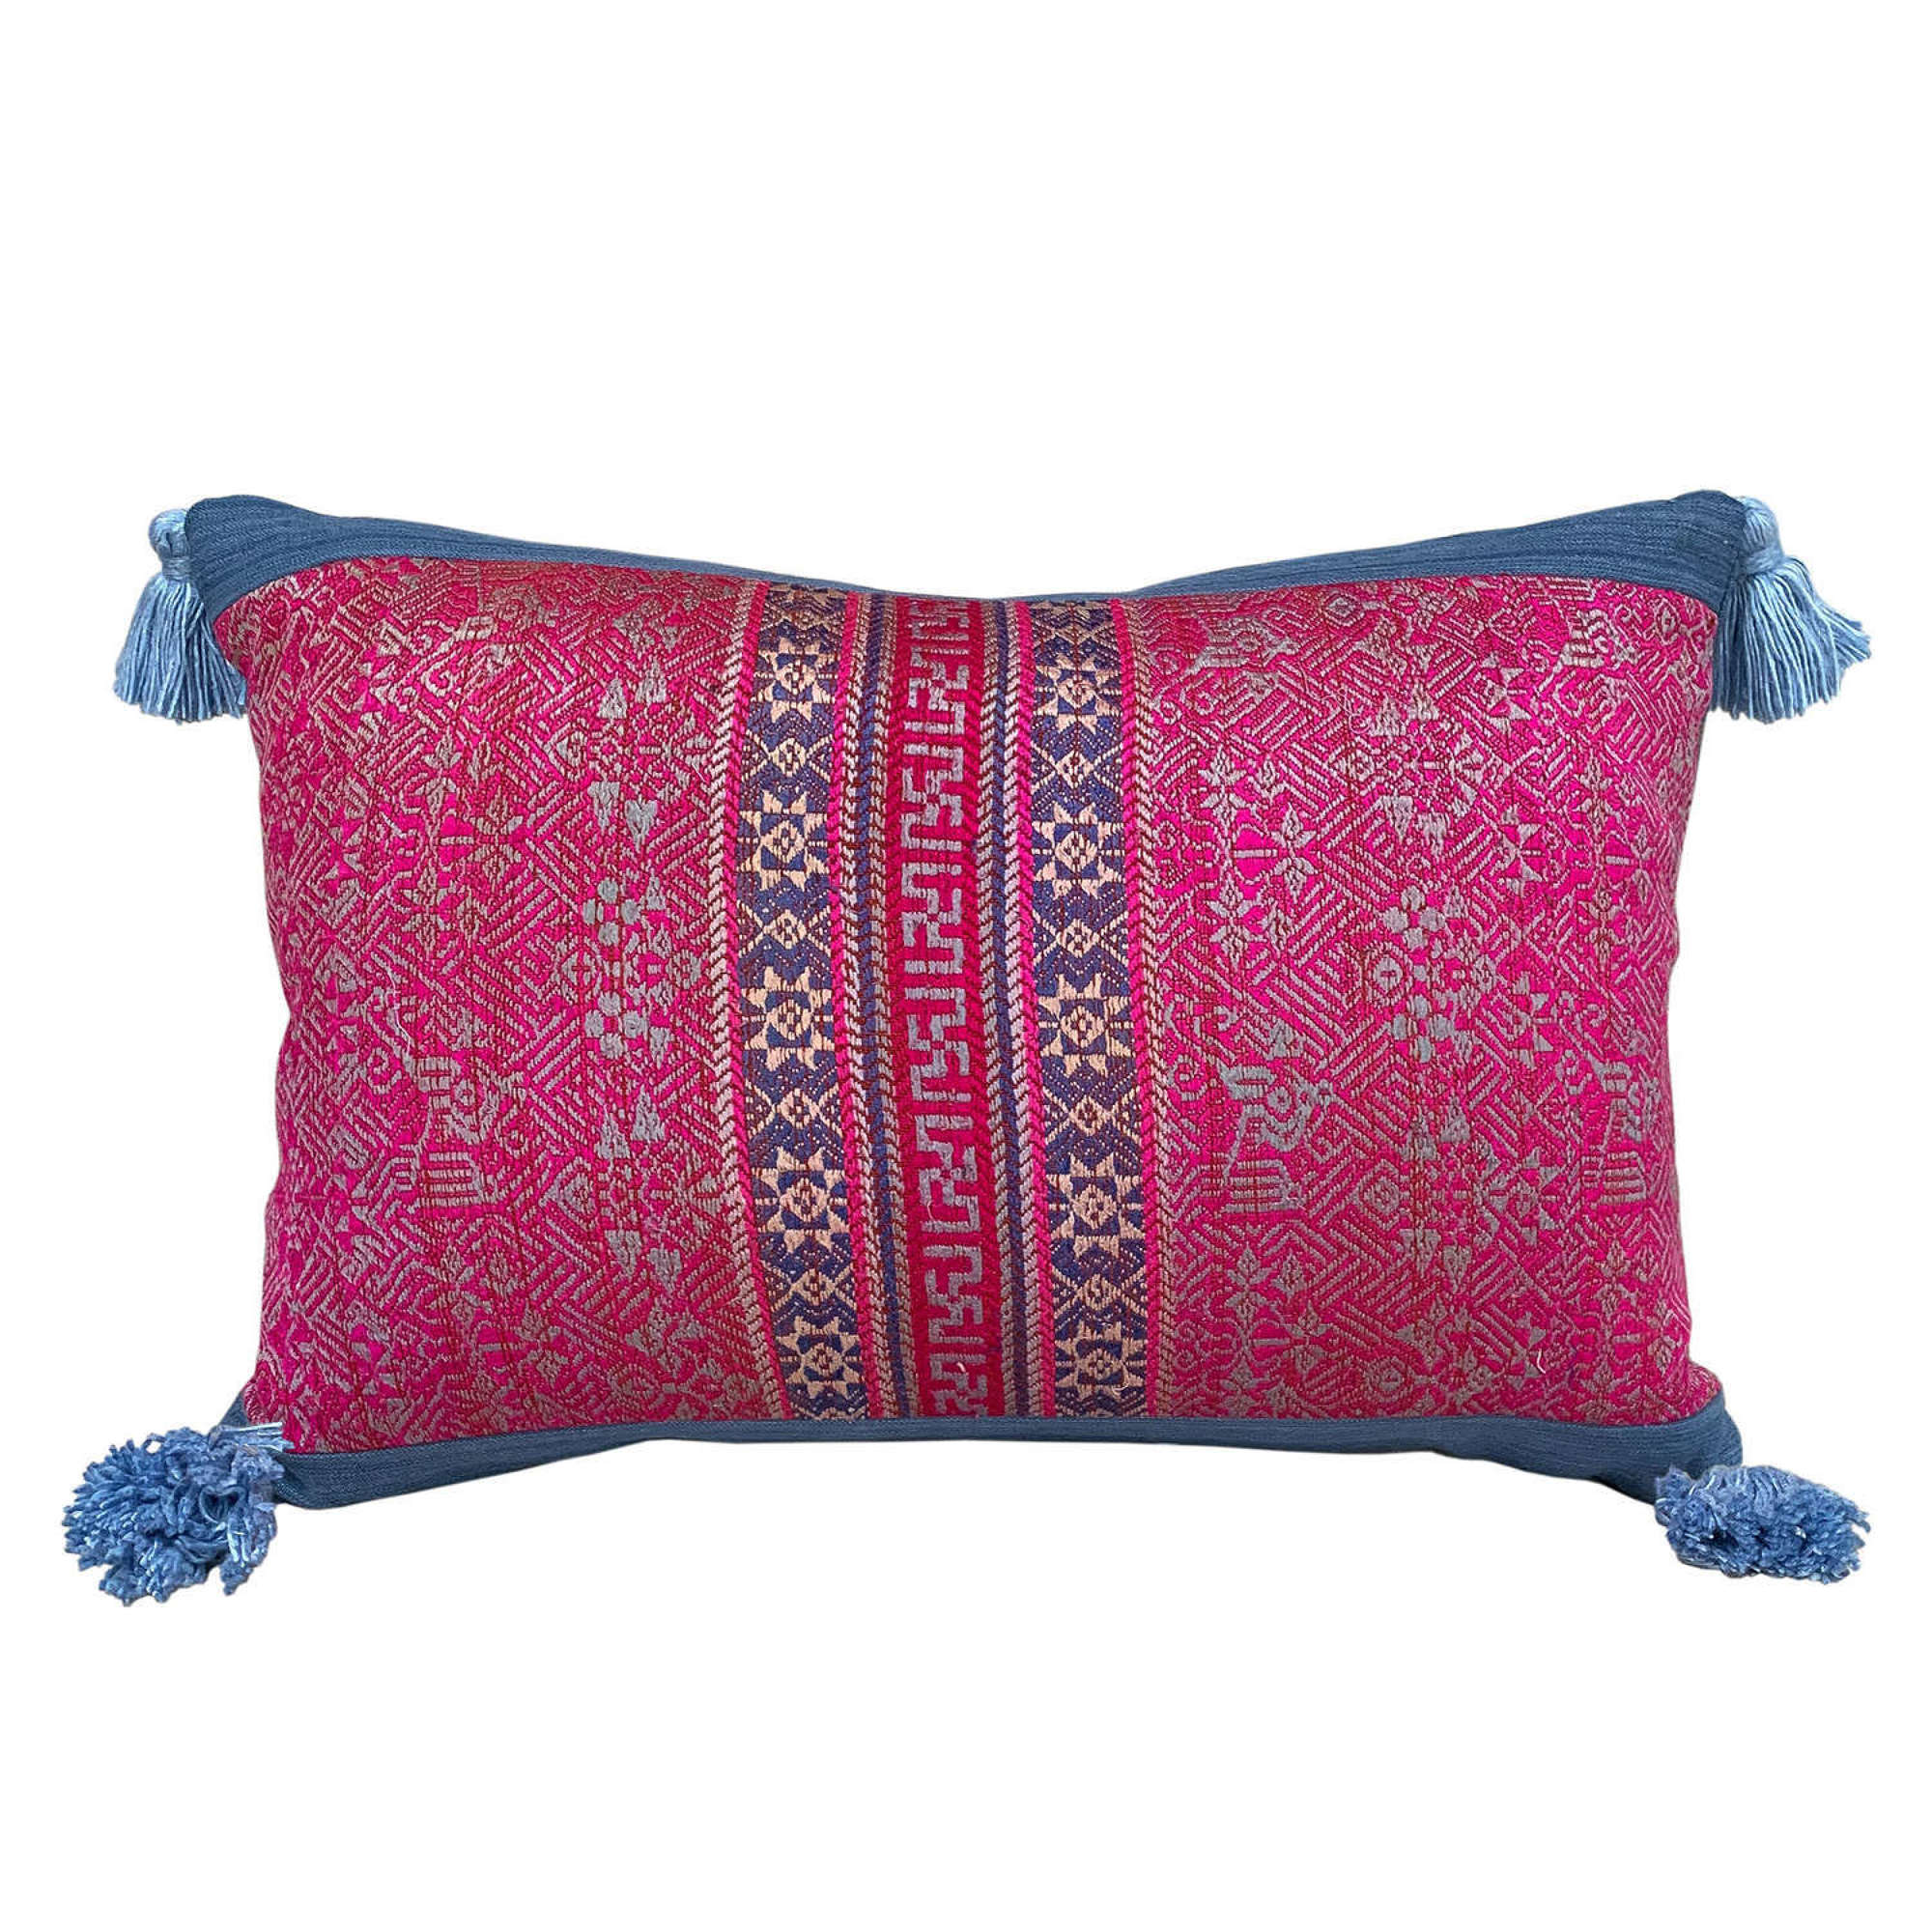 Maonan cushions with silk tassels